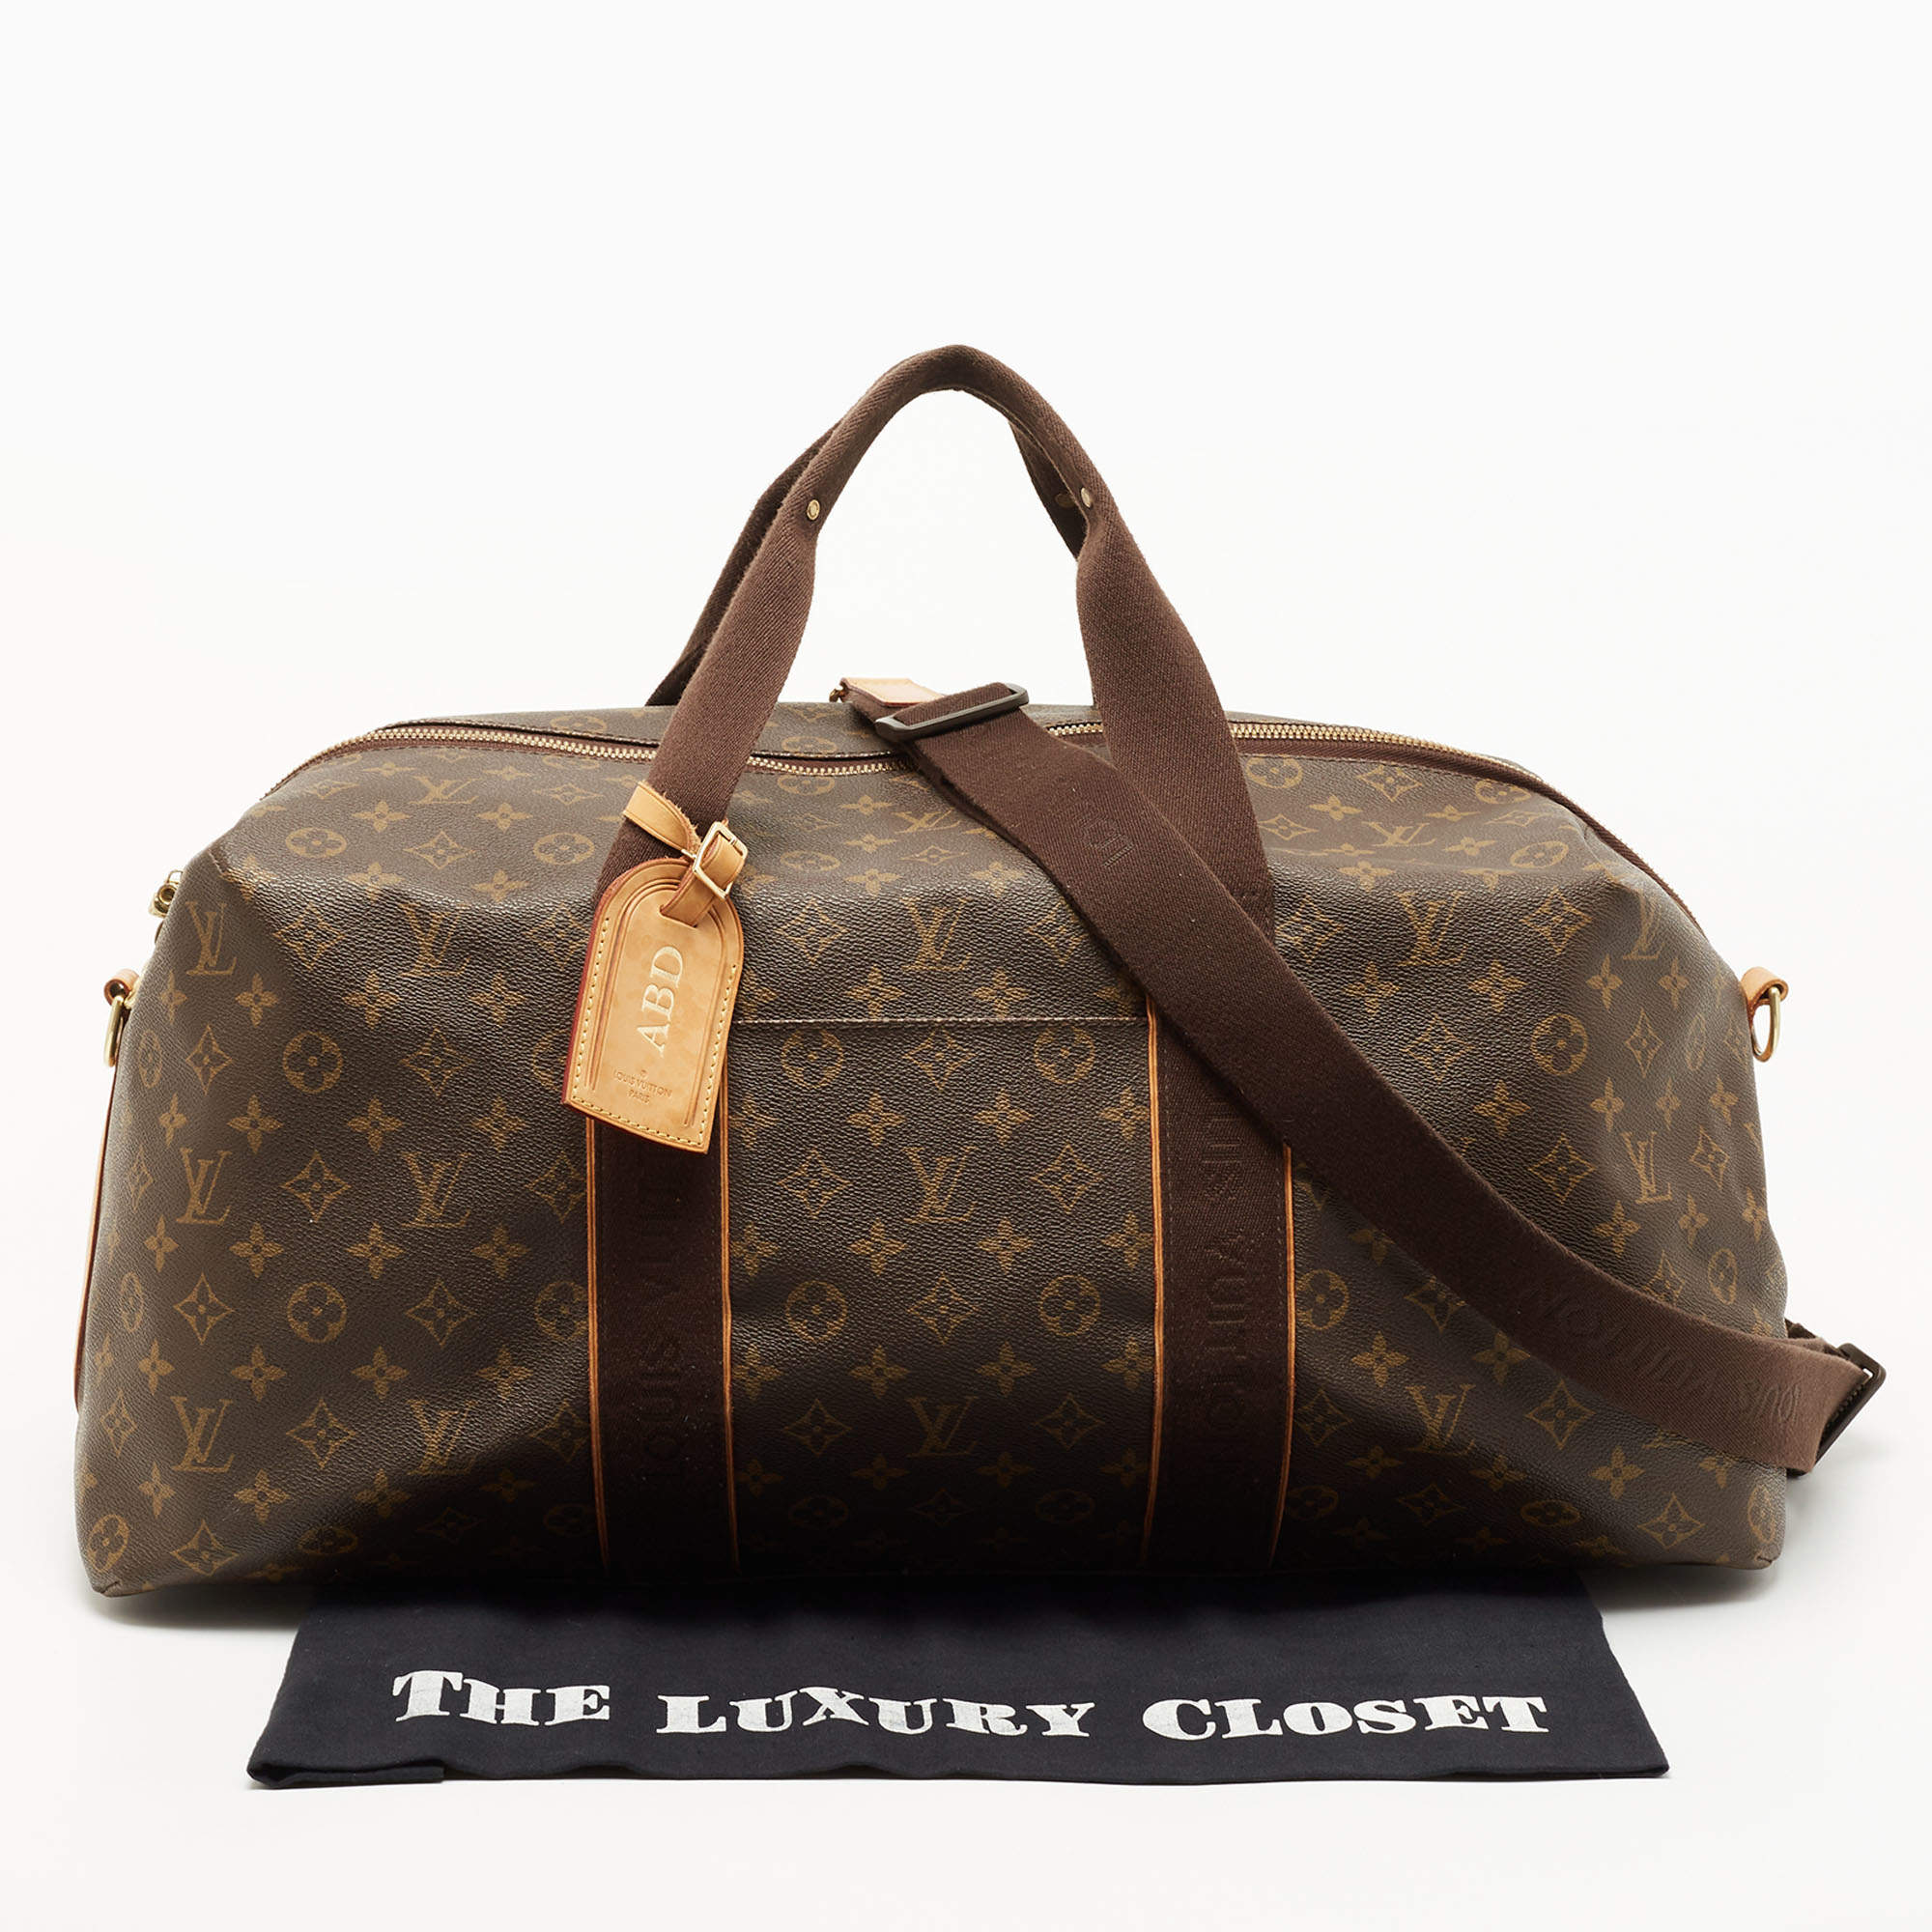 Authentic Louis Vuitton Beaubourg Weekender Bag